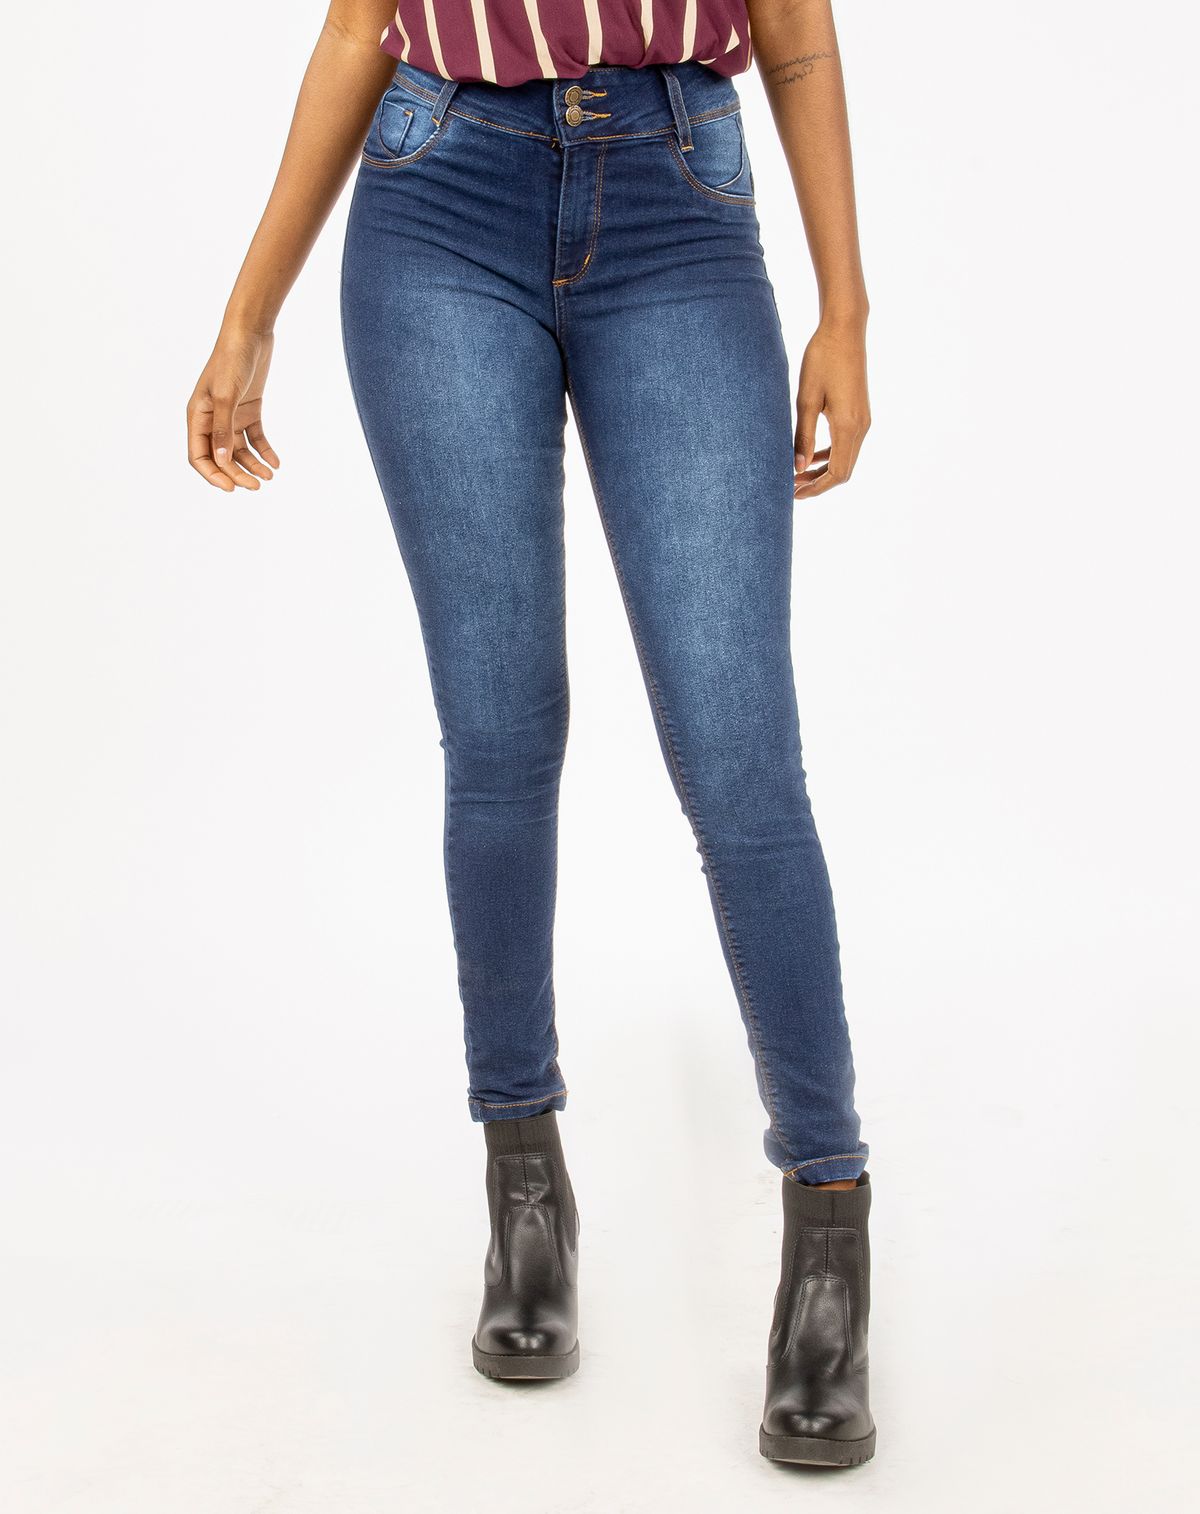 630804006-calca-jeans-skinny-cintura-alta-feminina-jeans-medio-46-8d2